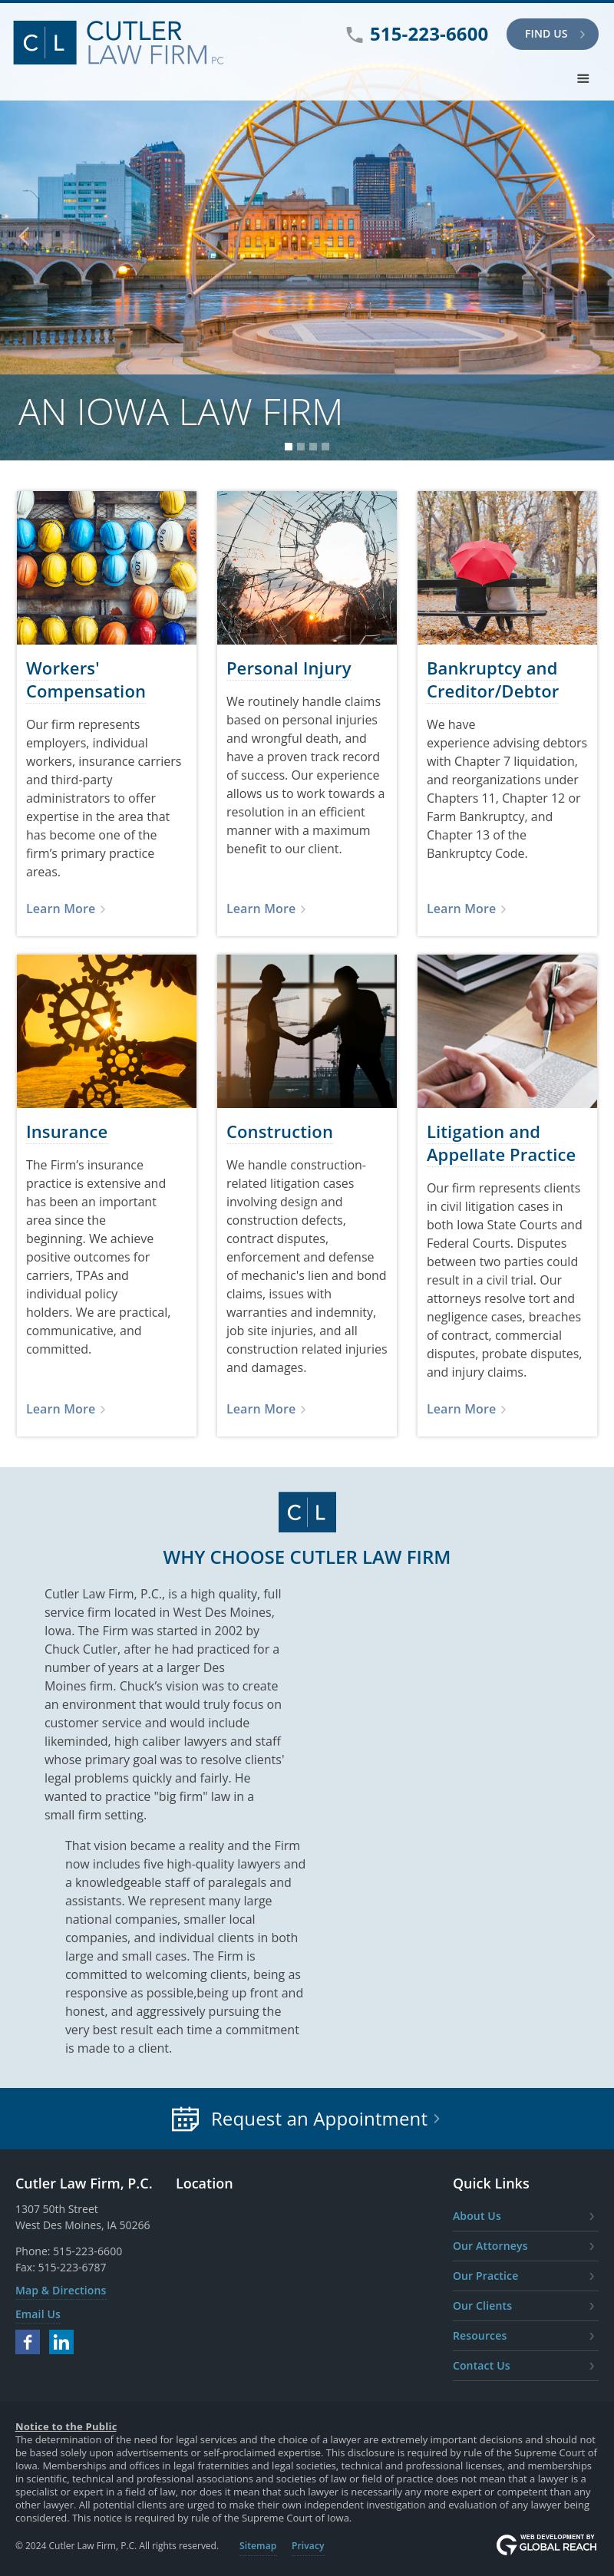 Cutler Law Firm, P.C - West Des Moines IA Lawyers